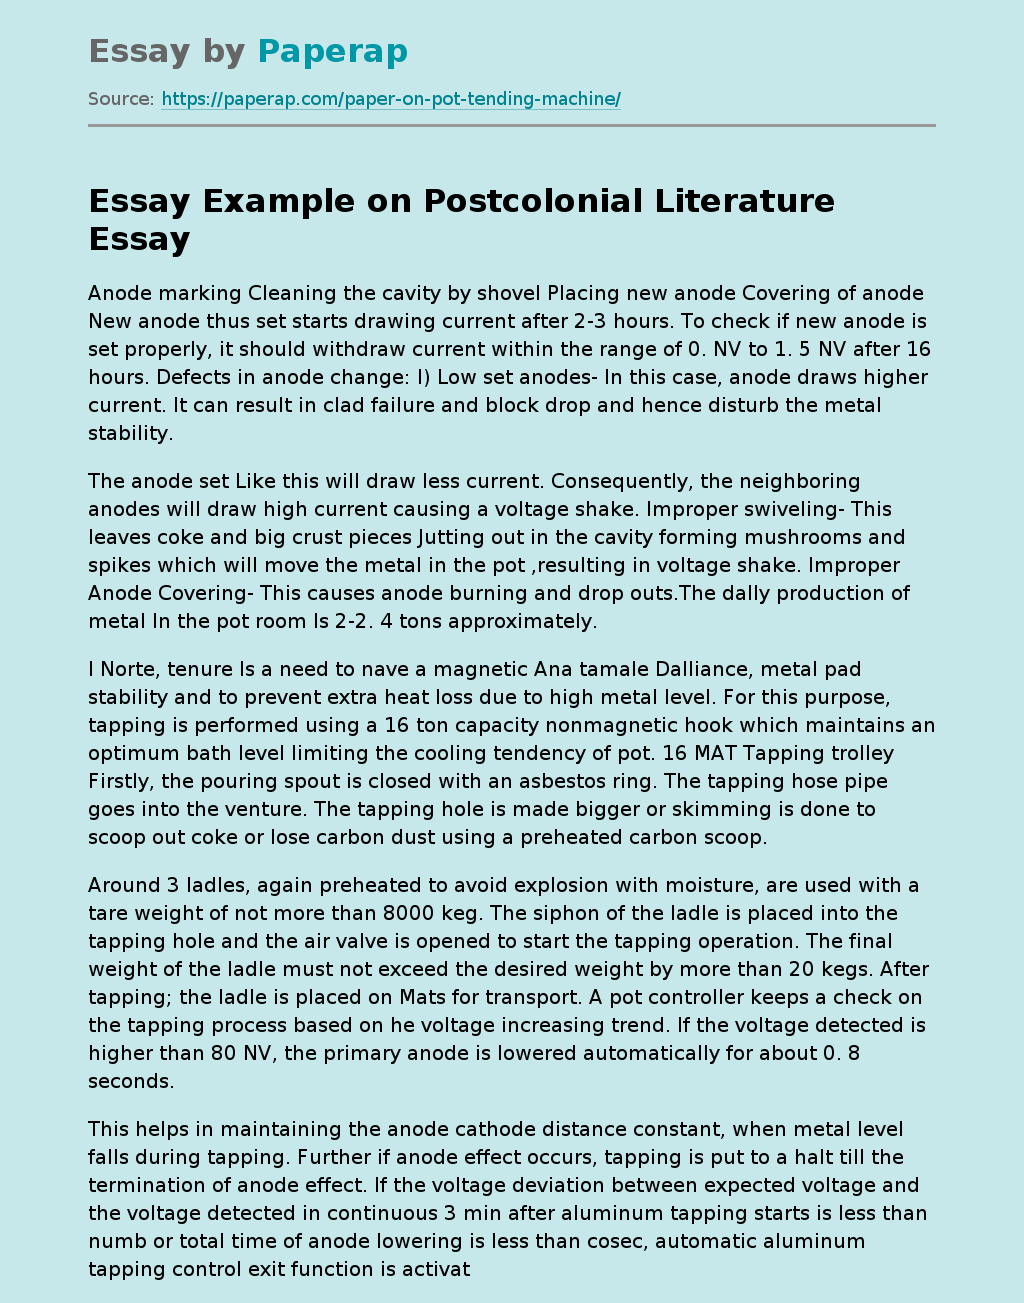 Essay Example on Postcolonial Literature